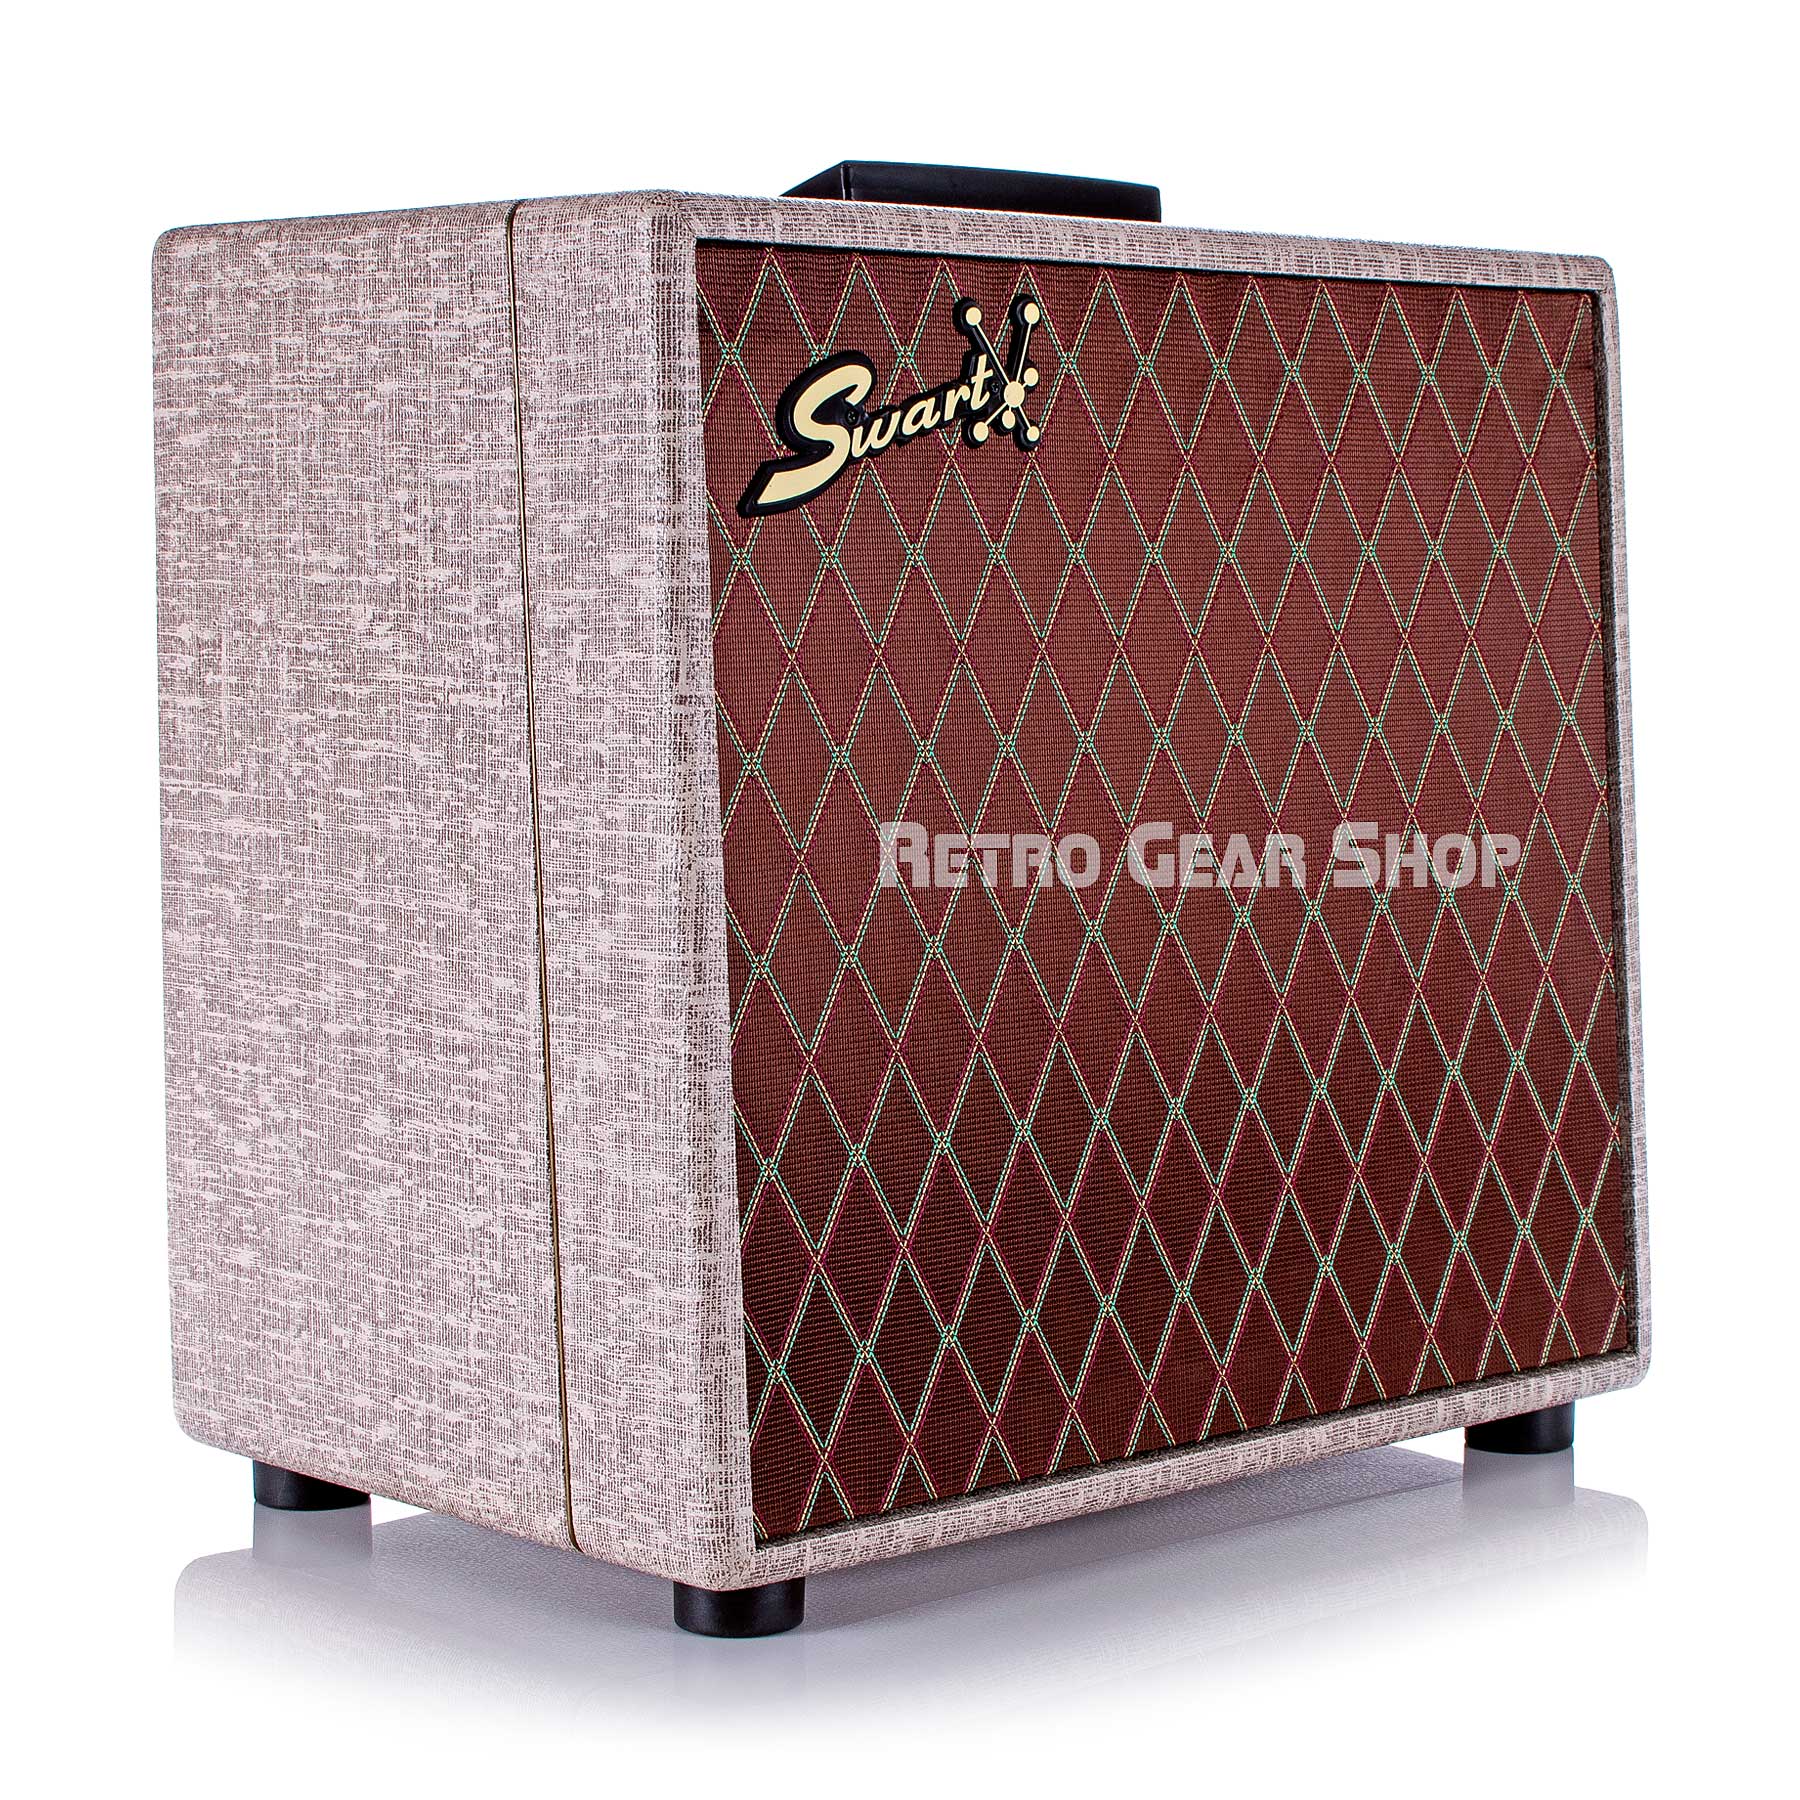 Swart Amps Small Box Mod 84 Fawn Diamond Vox 1x12 Combo Tube Amp